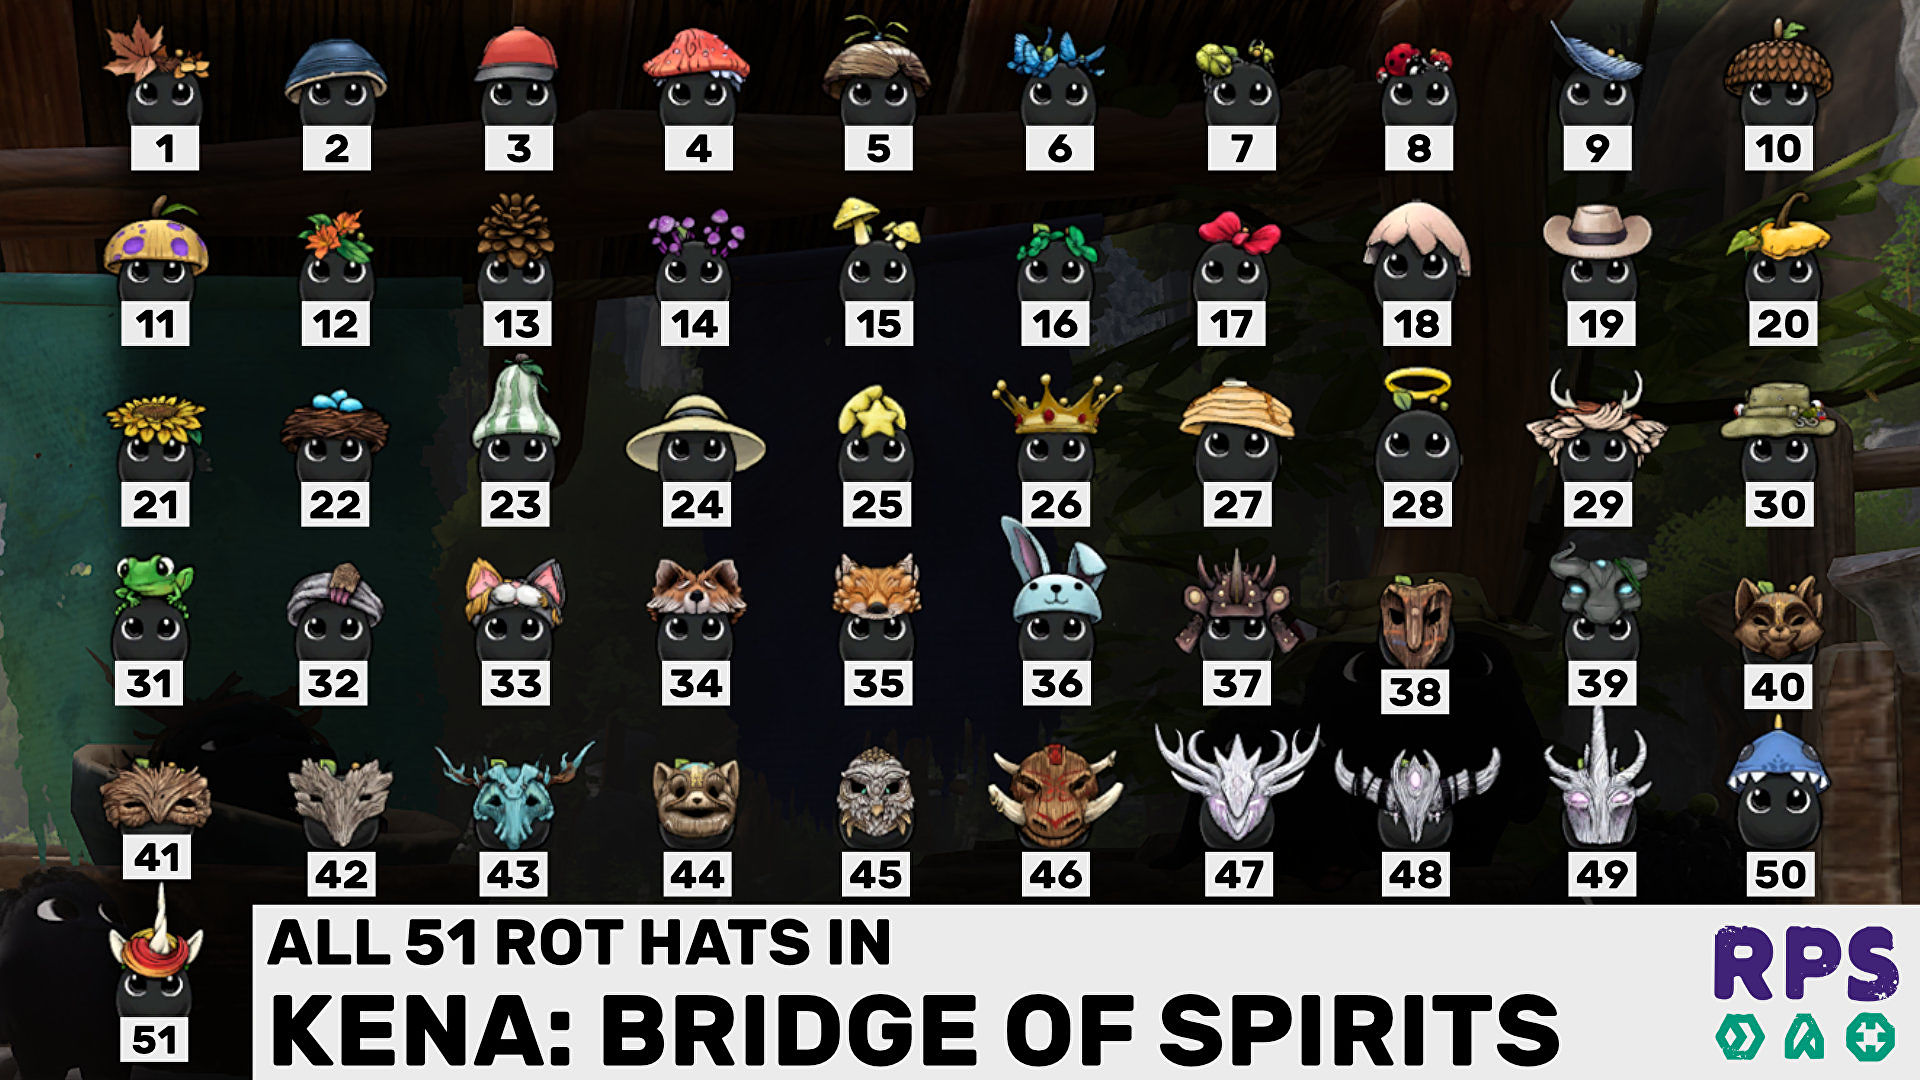 kena-bridge-of-spirits-all-rot-hats-numbered